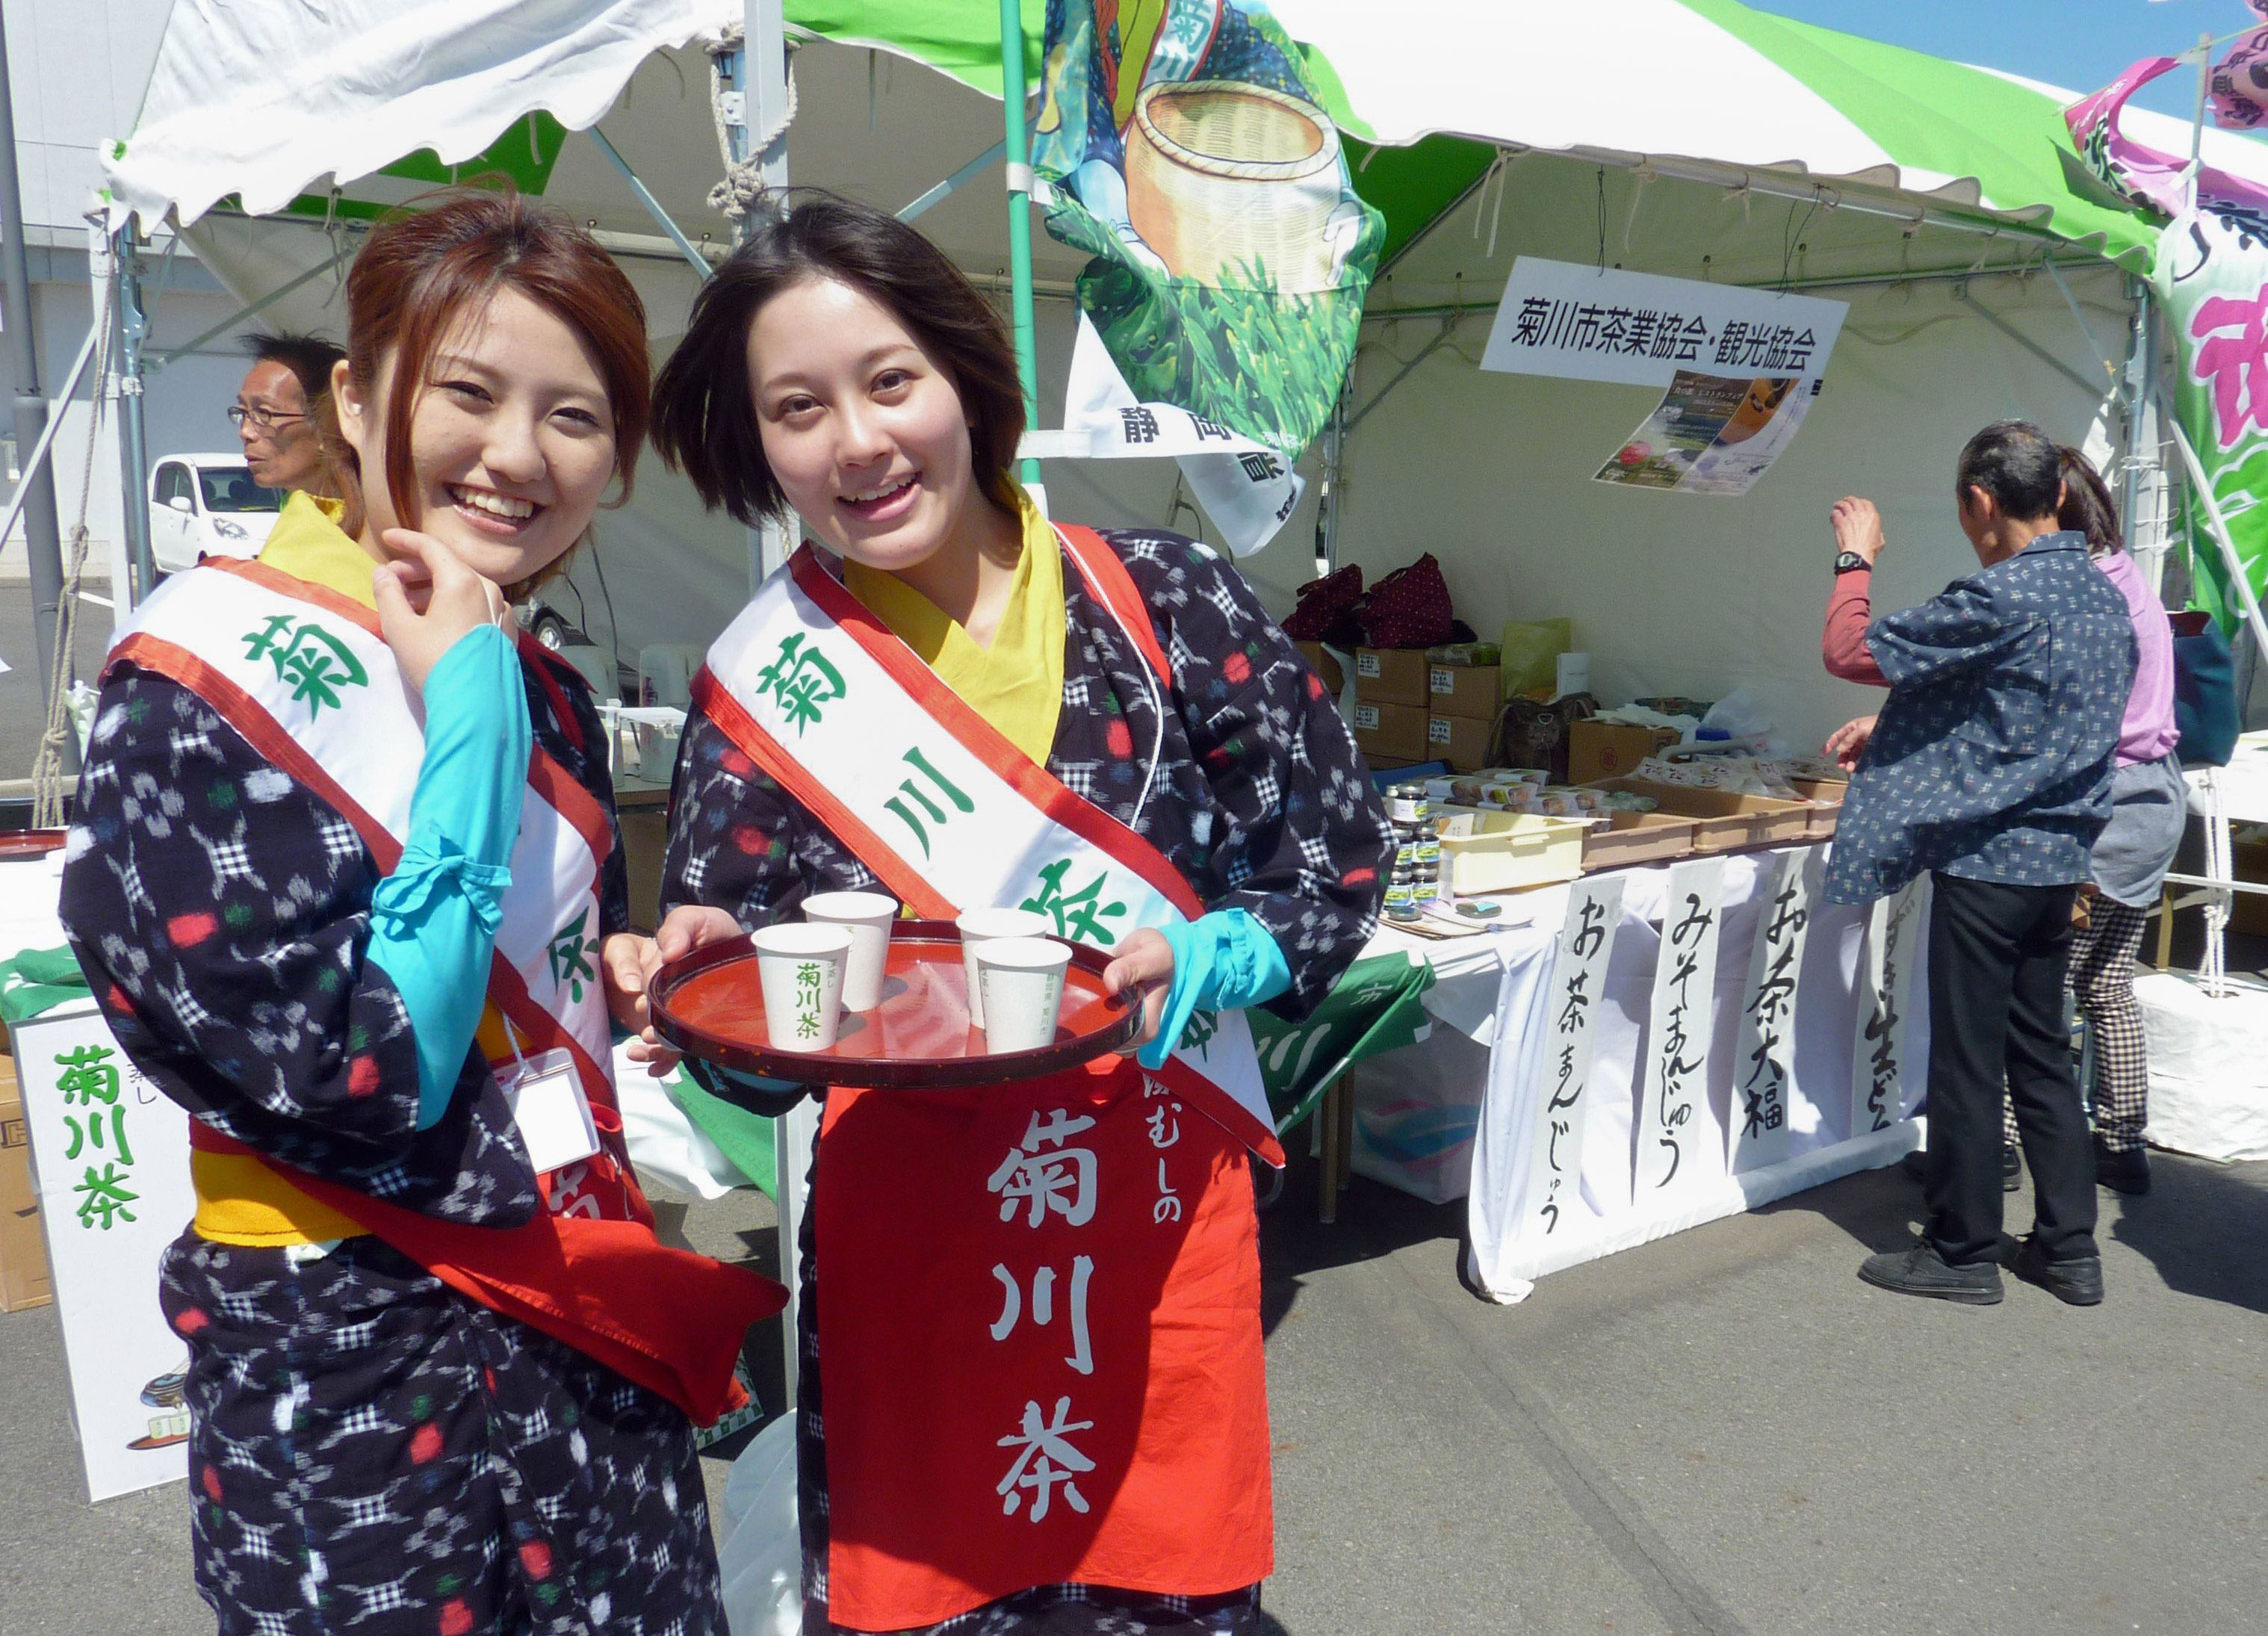 Tea aficionados gather in Japan for global festival | The Japan Times